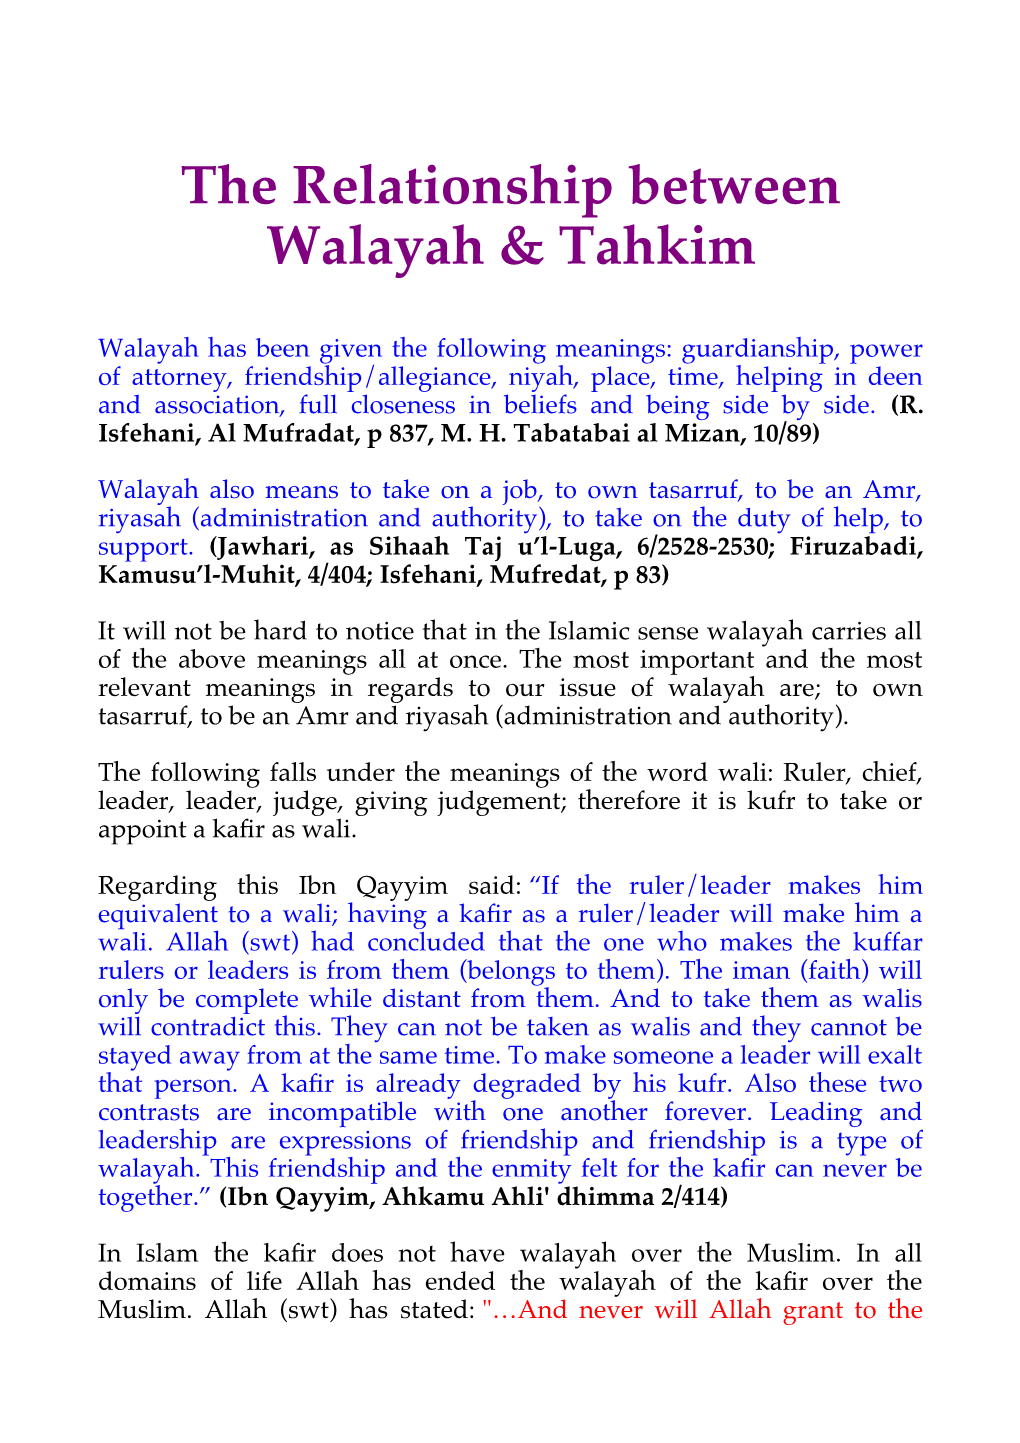 The Relationship Between Walayah & Tahkim